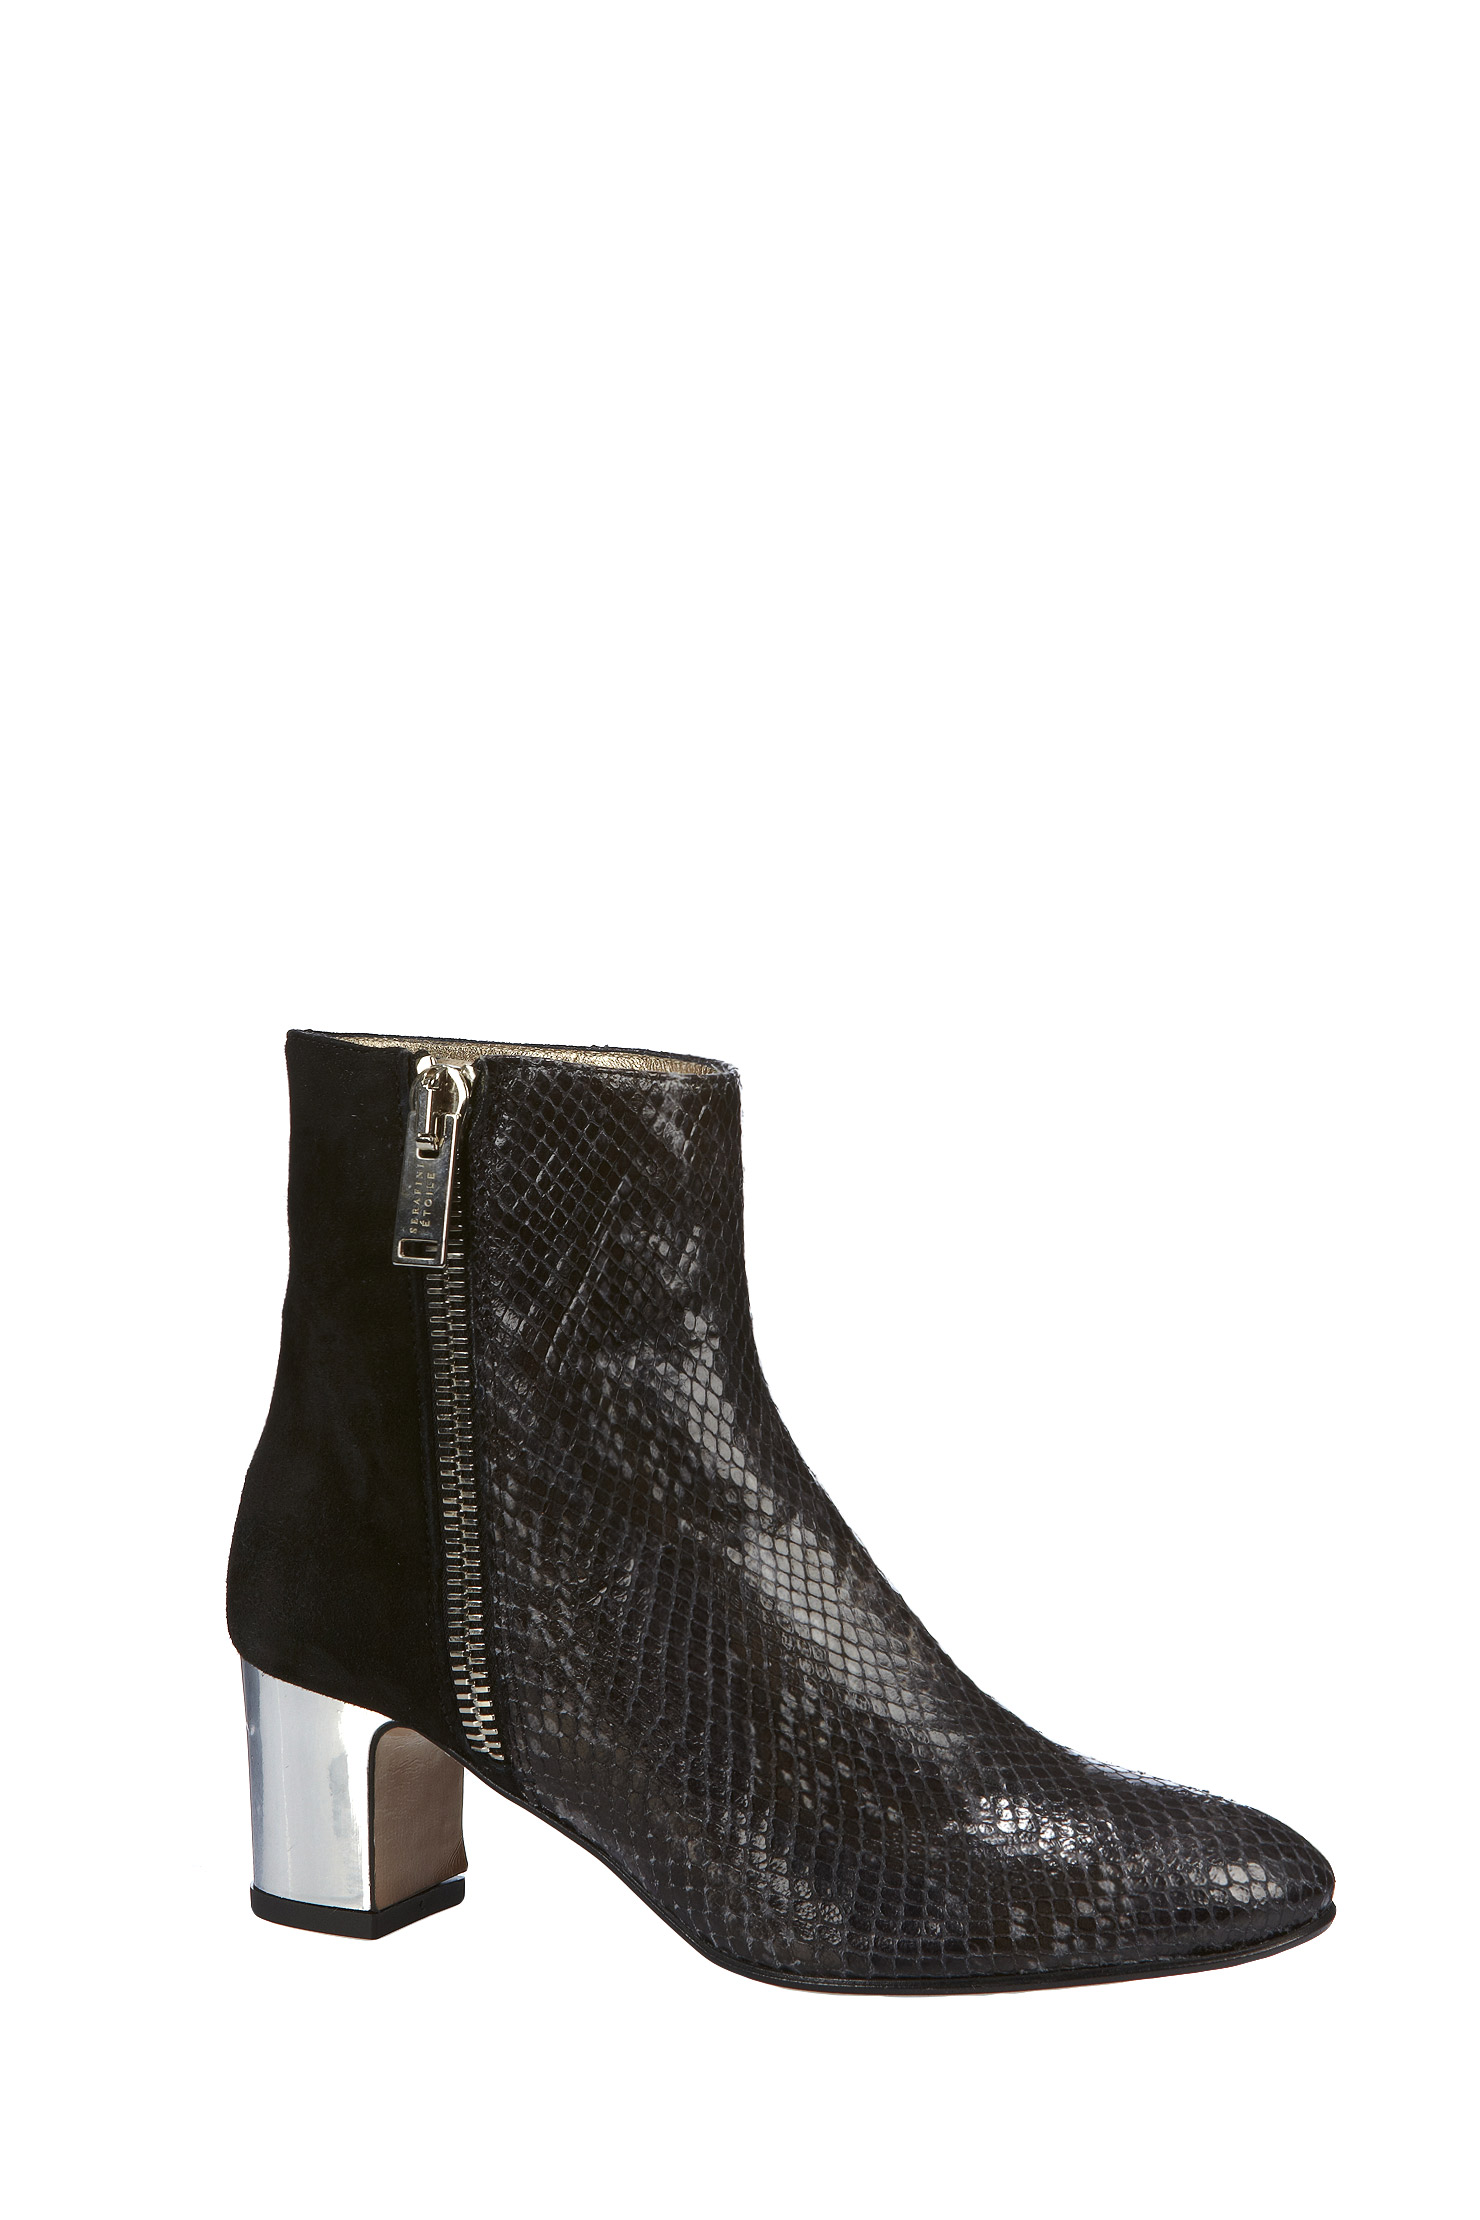 Serafini Boots Olivia Python in Black | Lyst